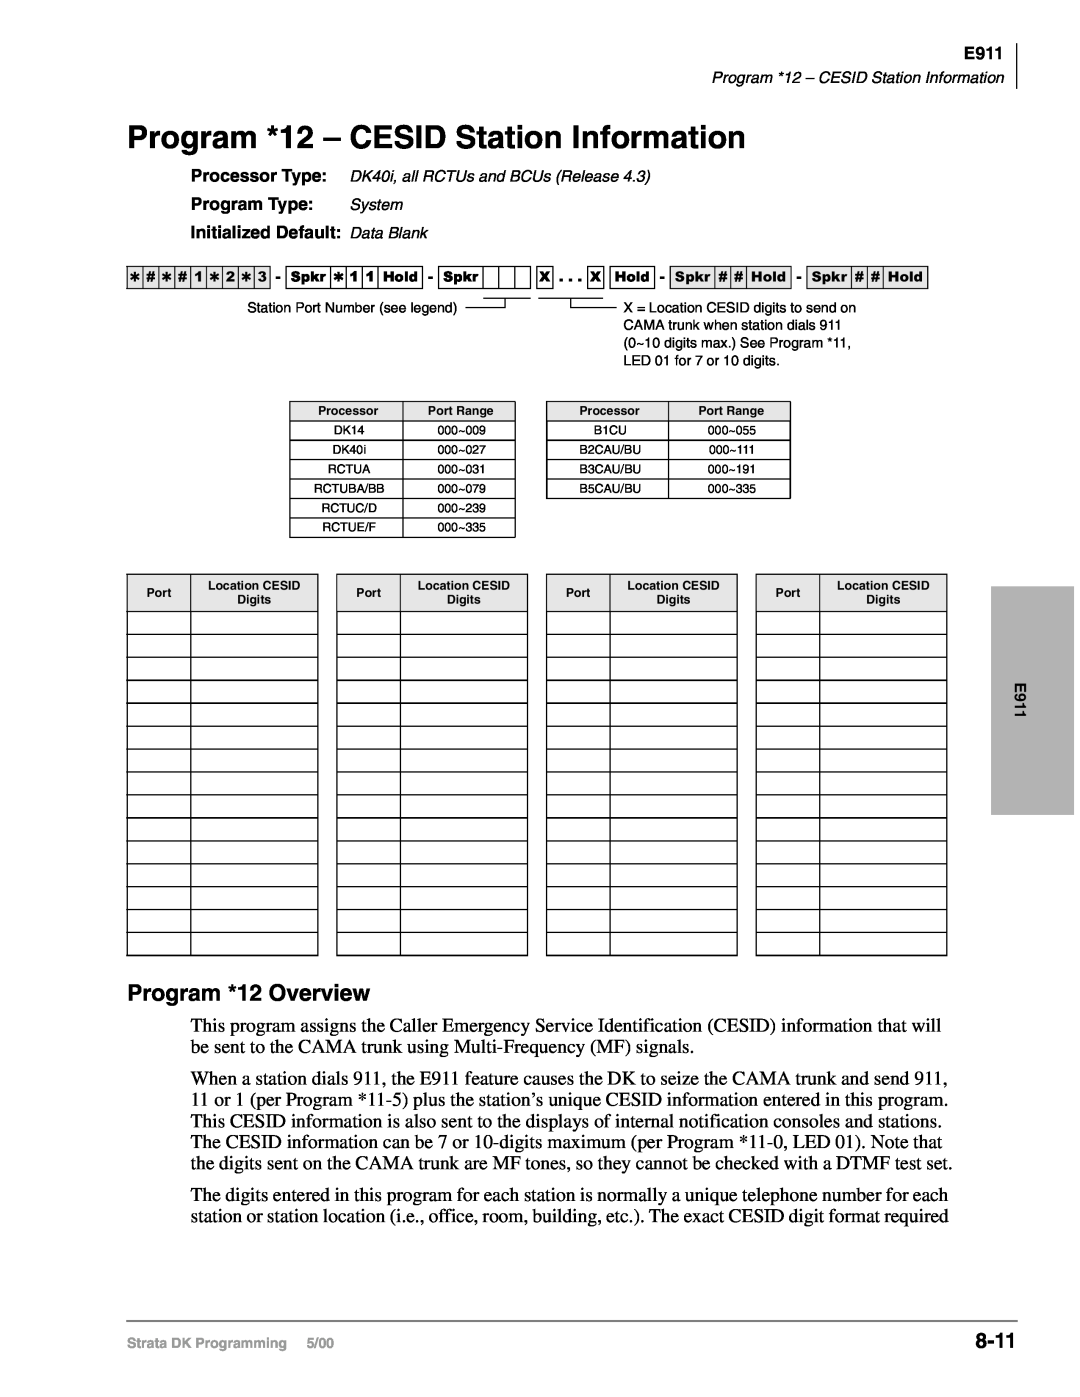 Toshiba DK424I, dk14, DK40I manual Program *12 – CESID Station Information, Program *12 Overview, 8-11 